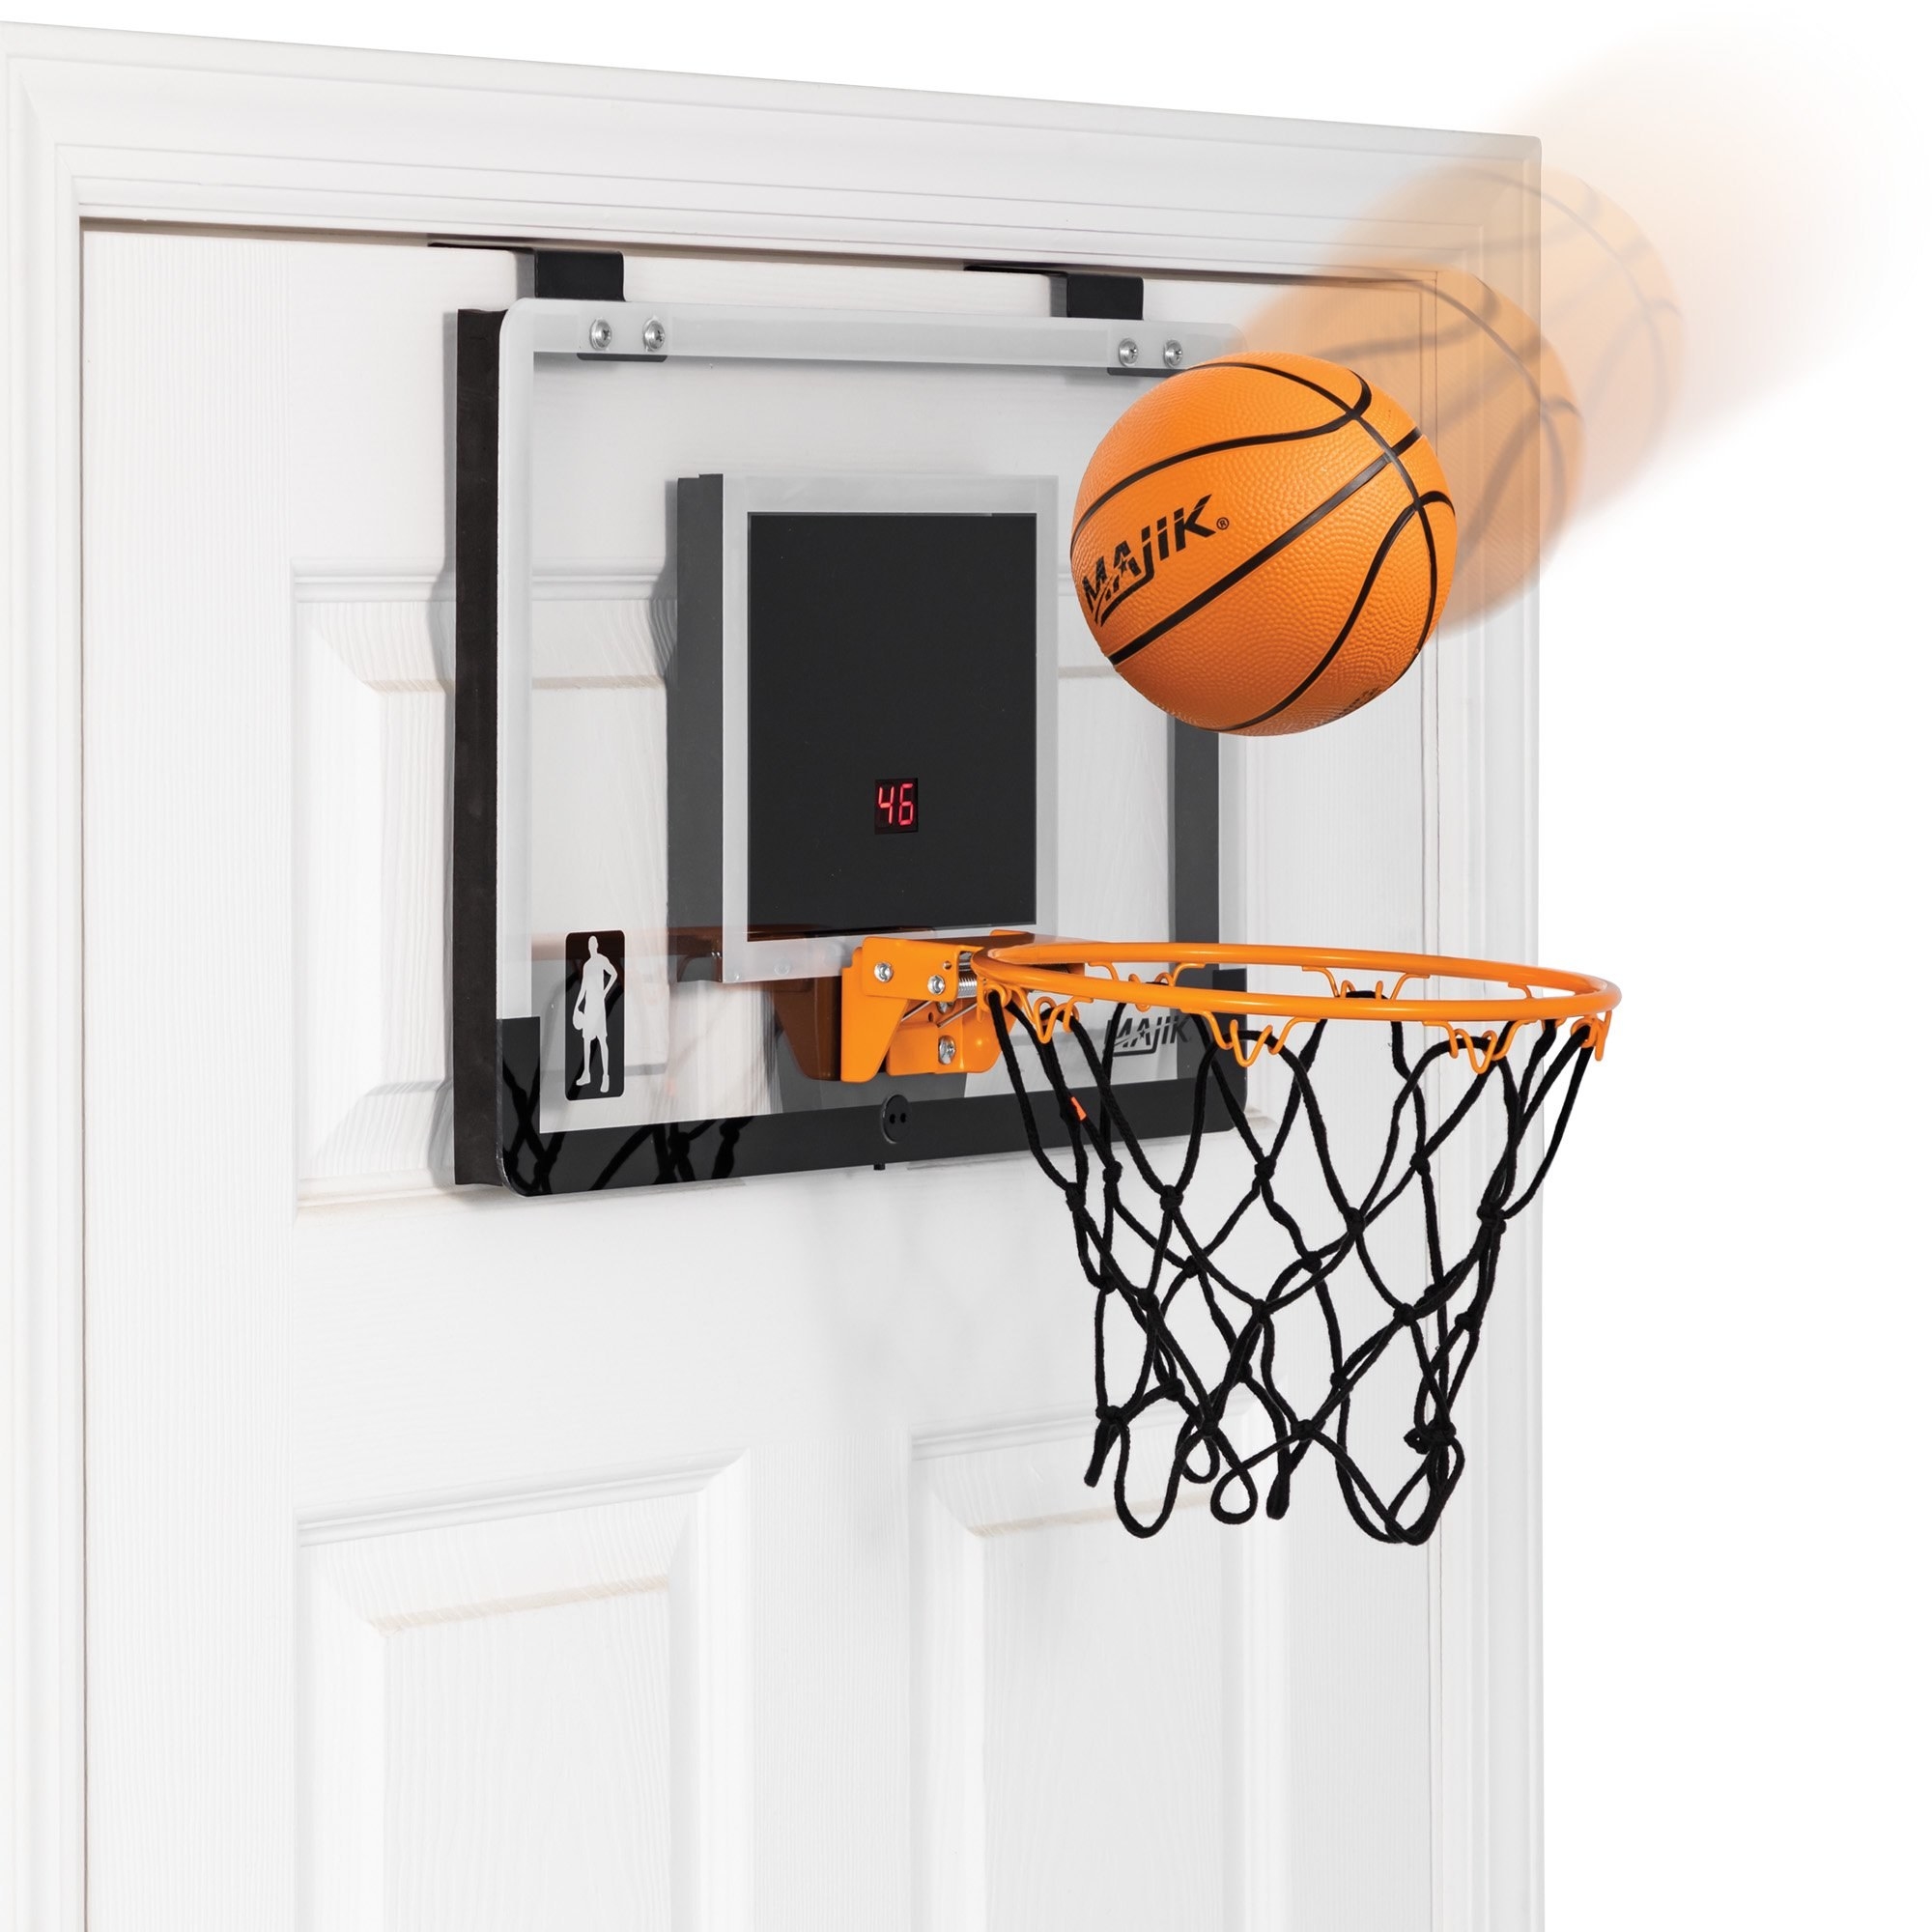 A basketball about to go in an over-the-door indoor hoop